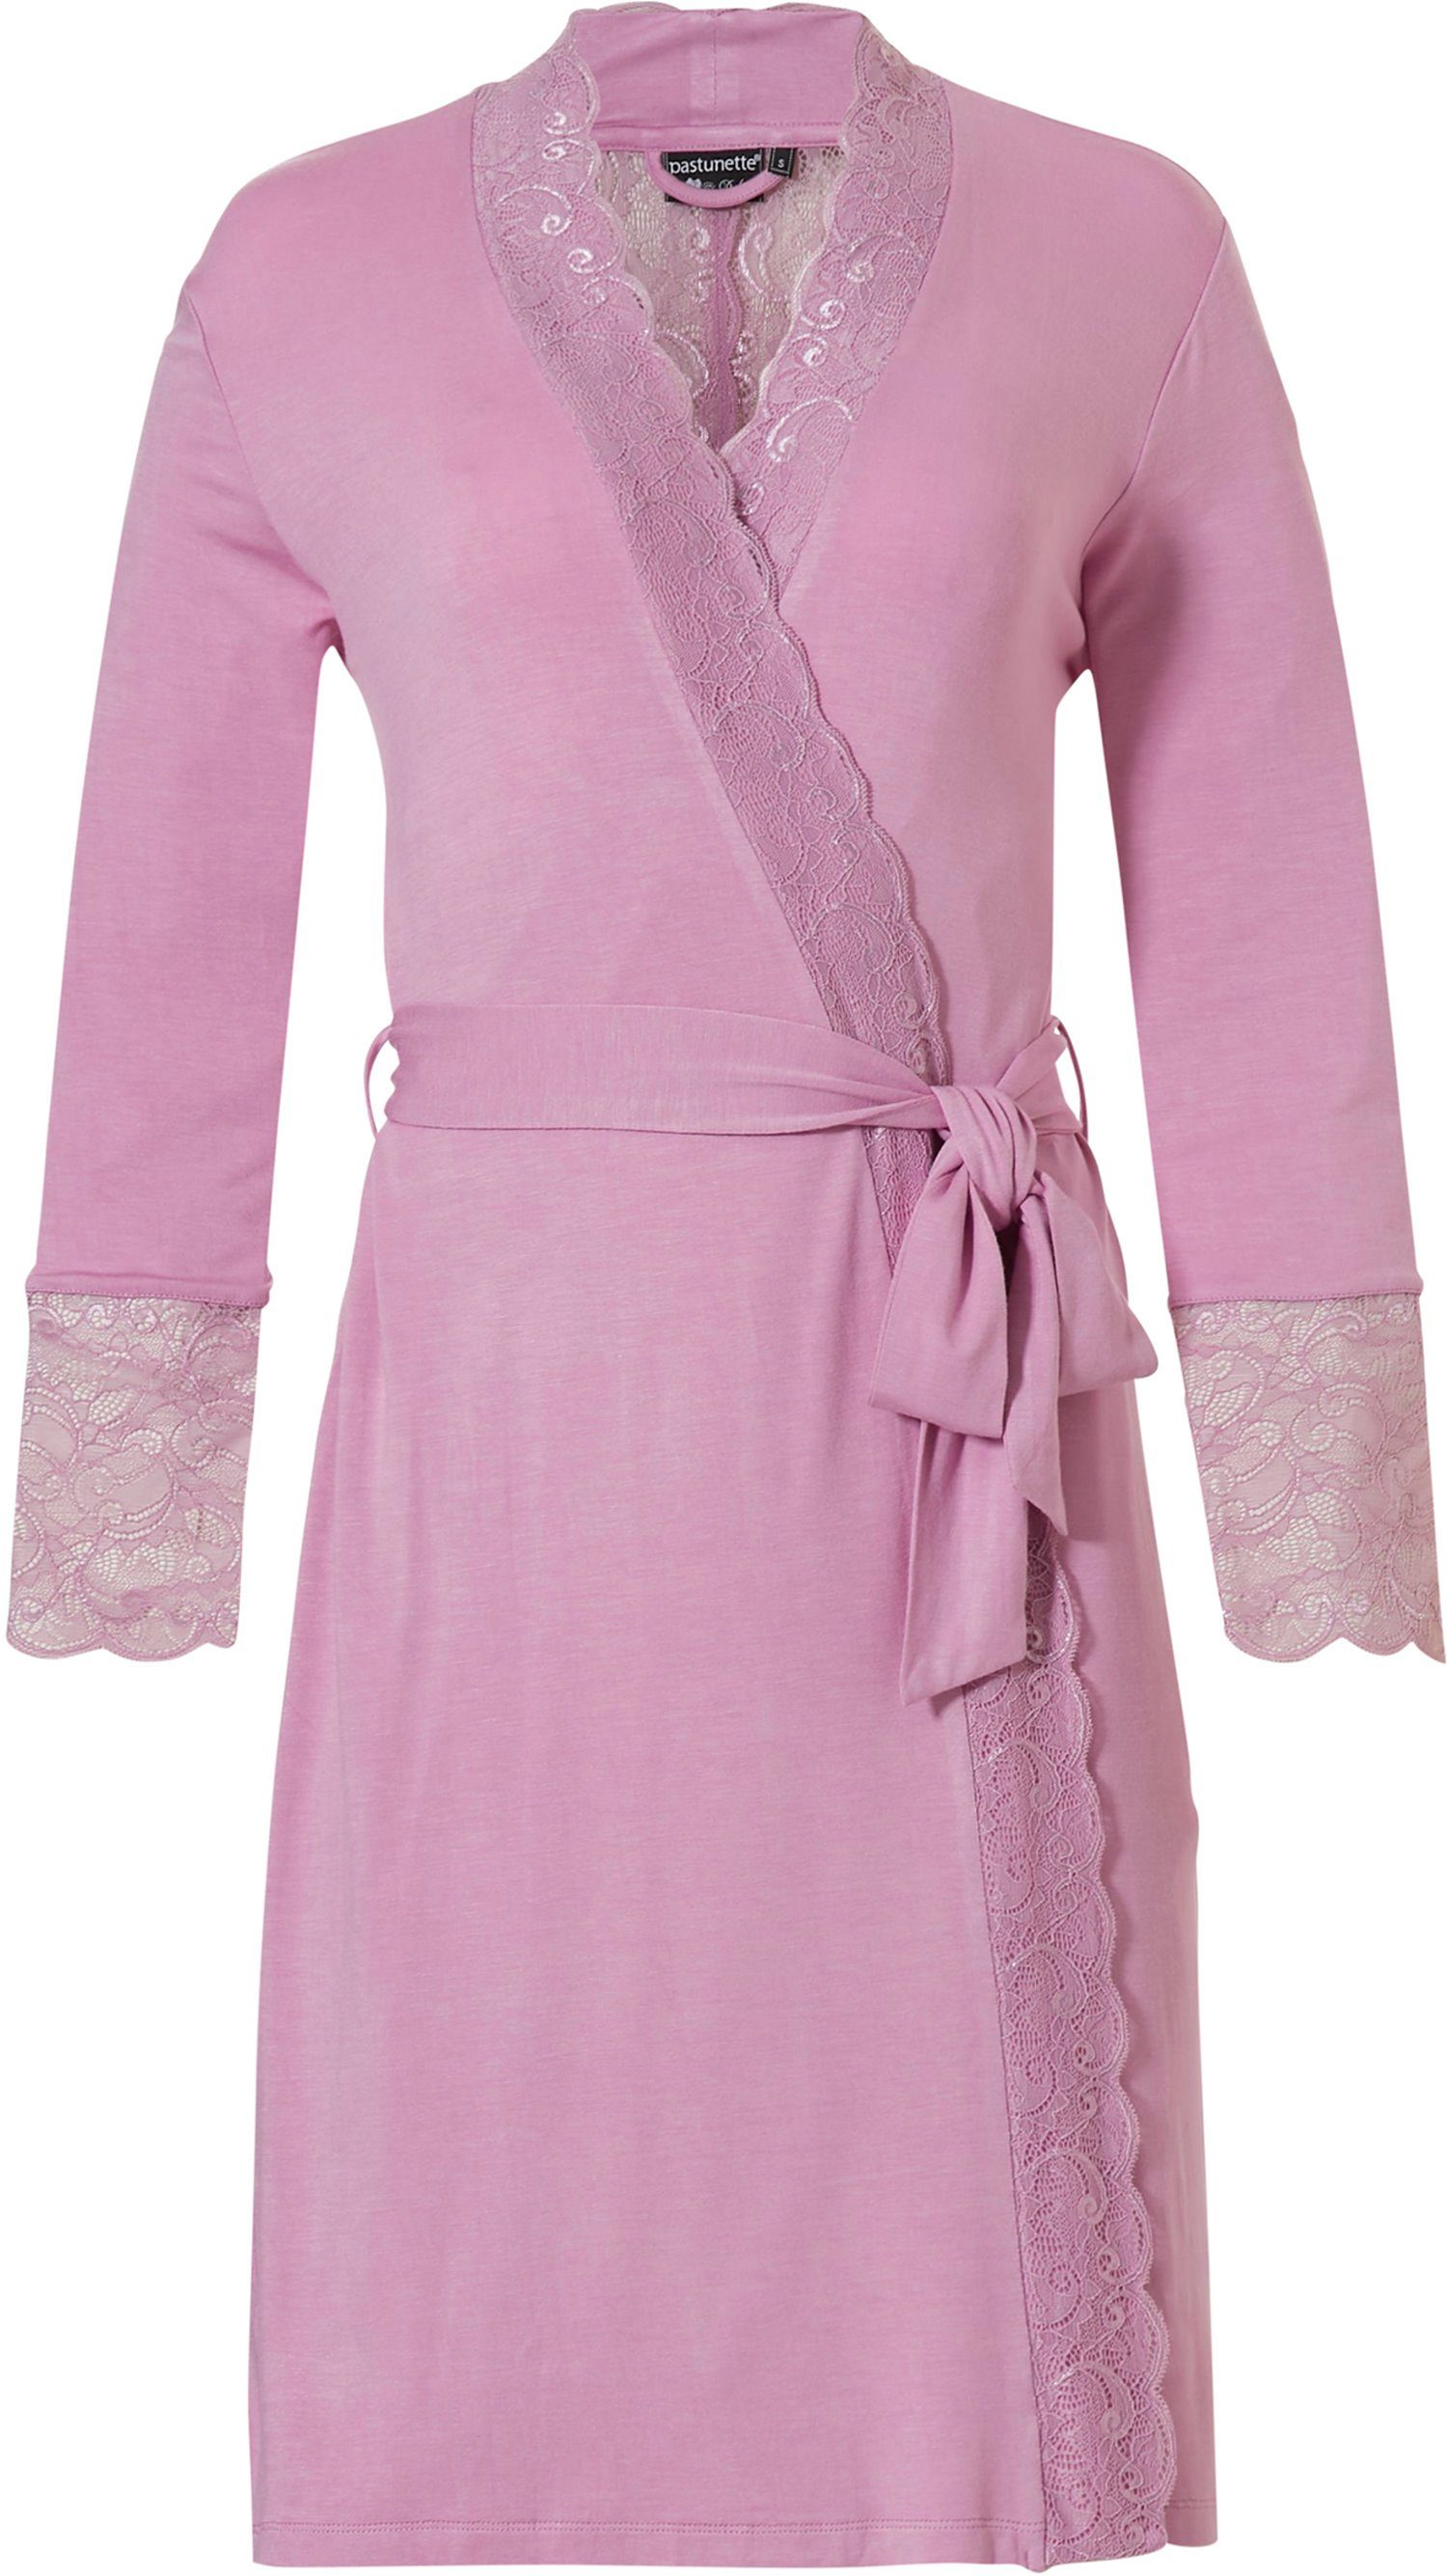 Pastunette Kimono Damen Morgenmantel mit Kimono-Kragen, Spitze, Viskosemischung, Edles Gürtel, pink Design kurz, light